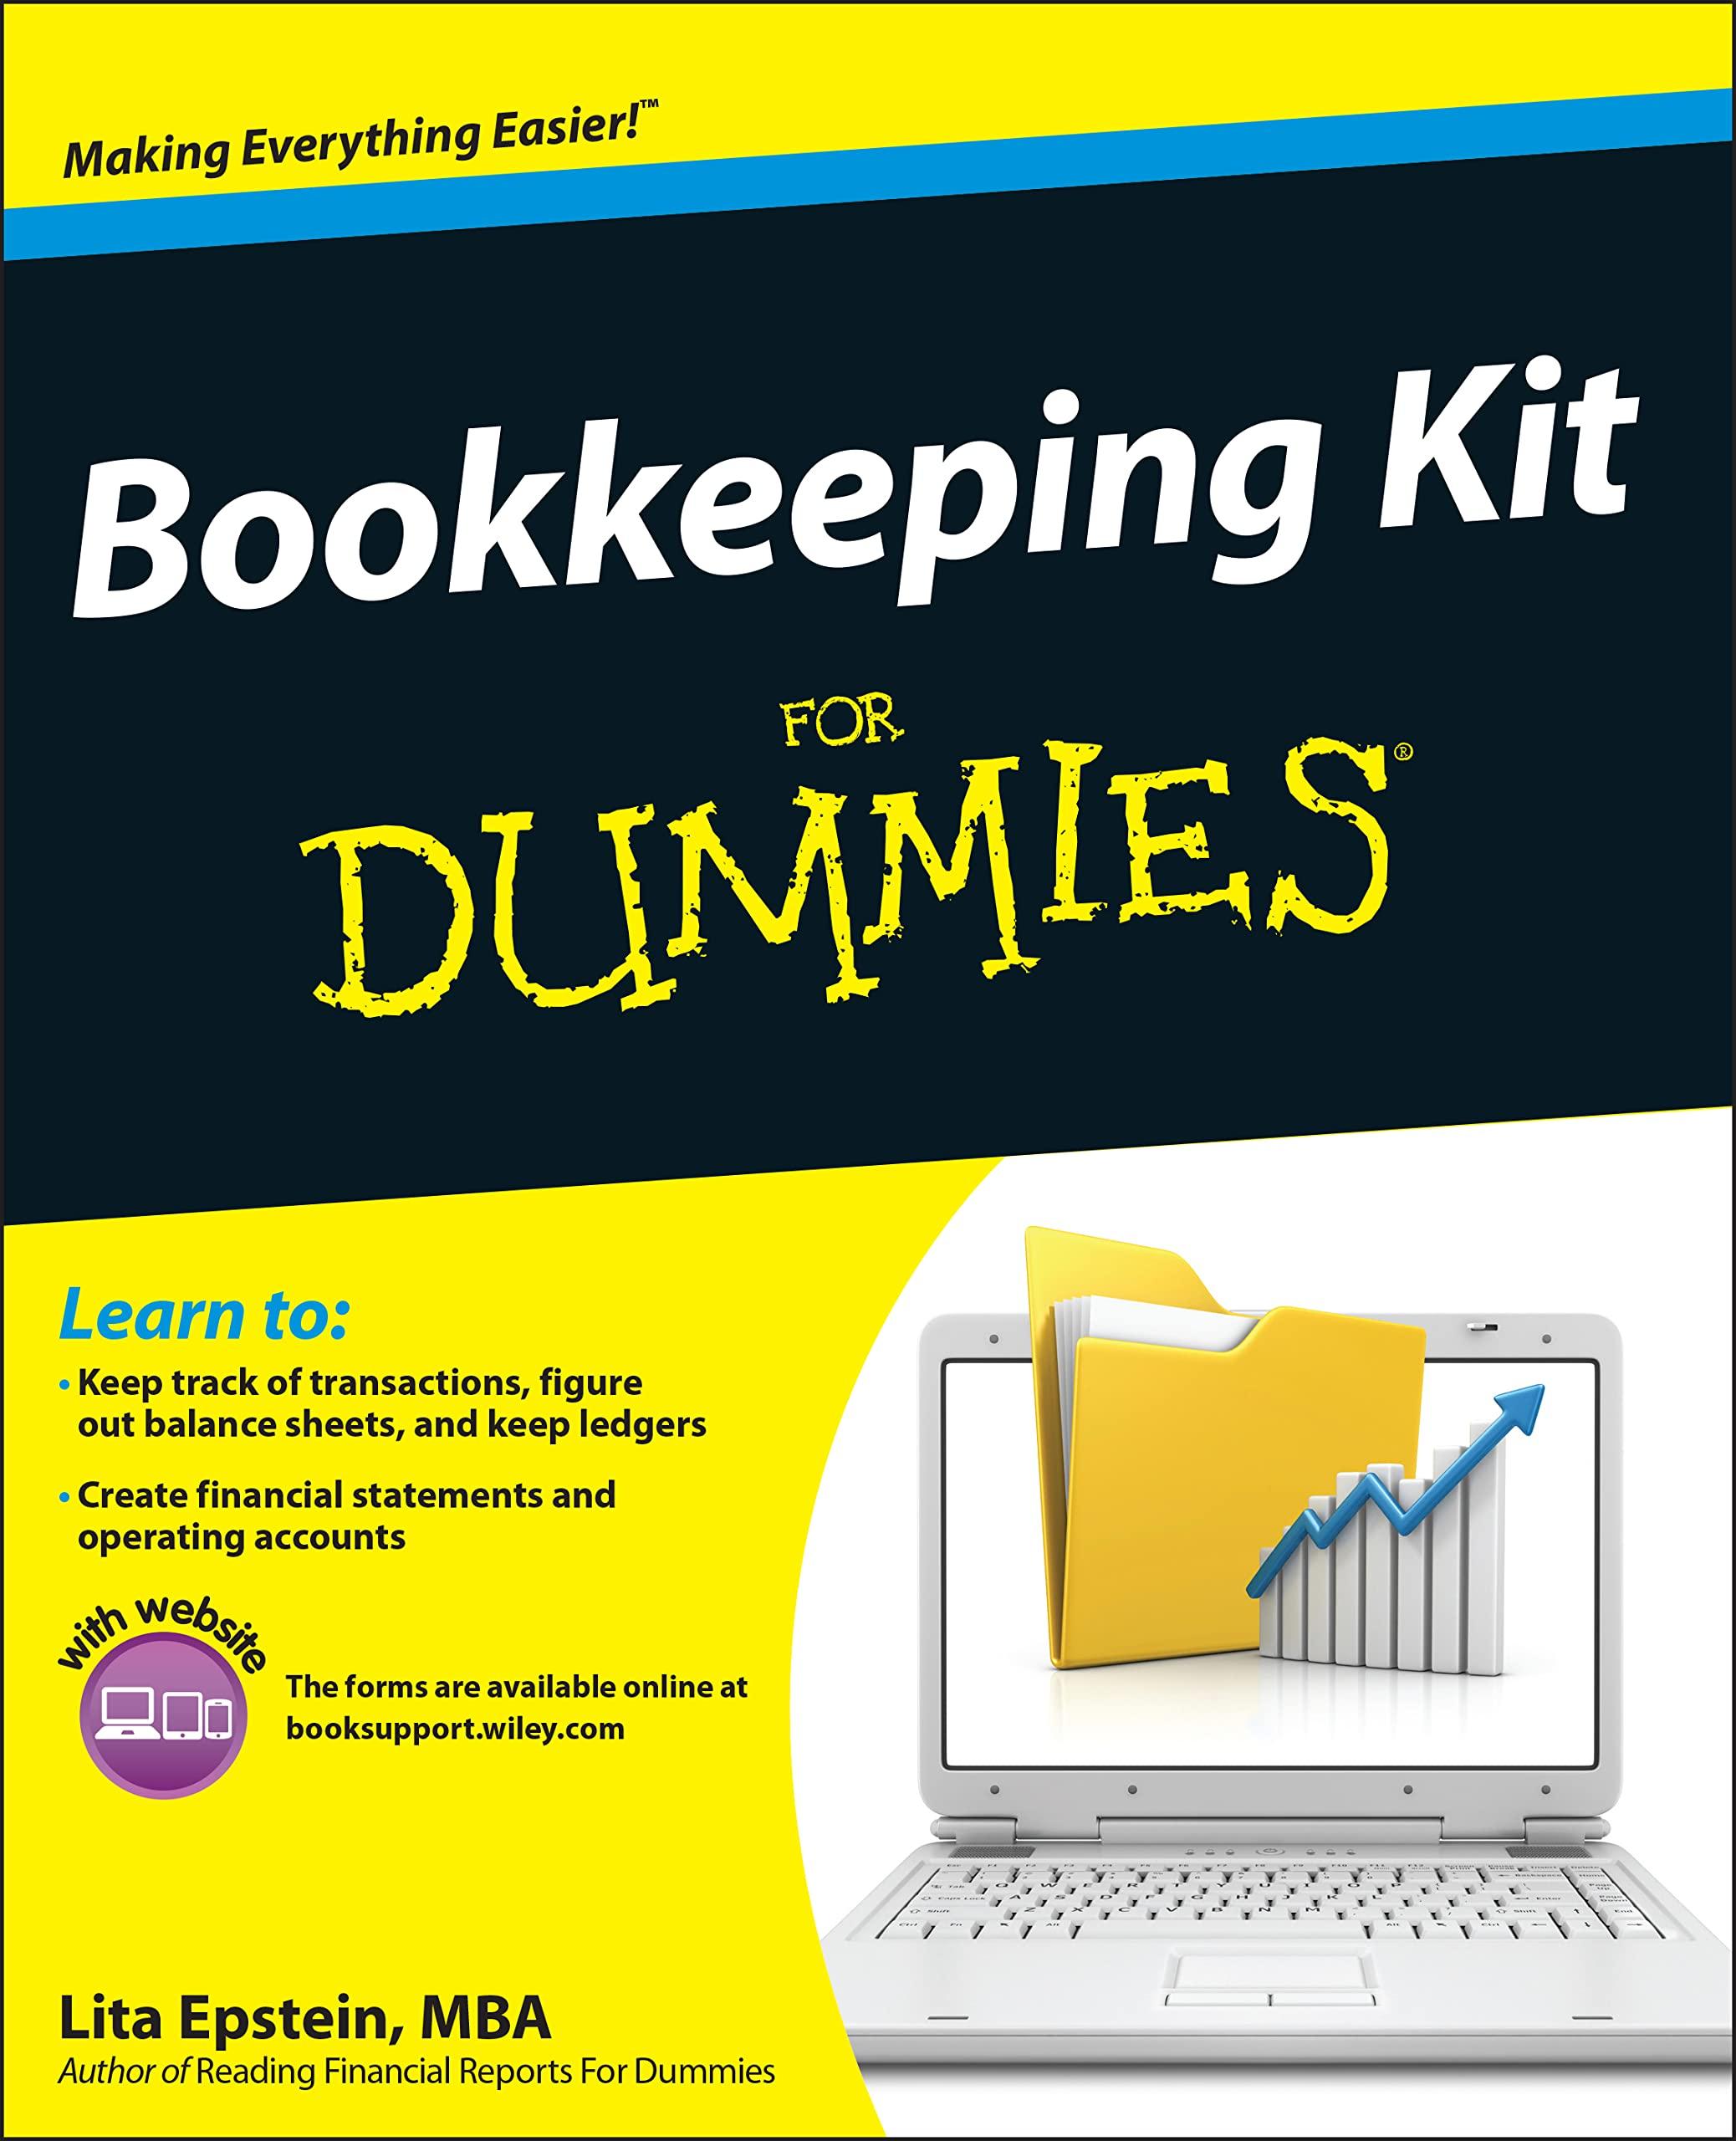 bookkeeping kit for dummies 1st edition lita epstein 1118116453, 978-1118116456